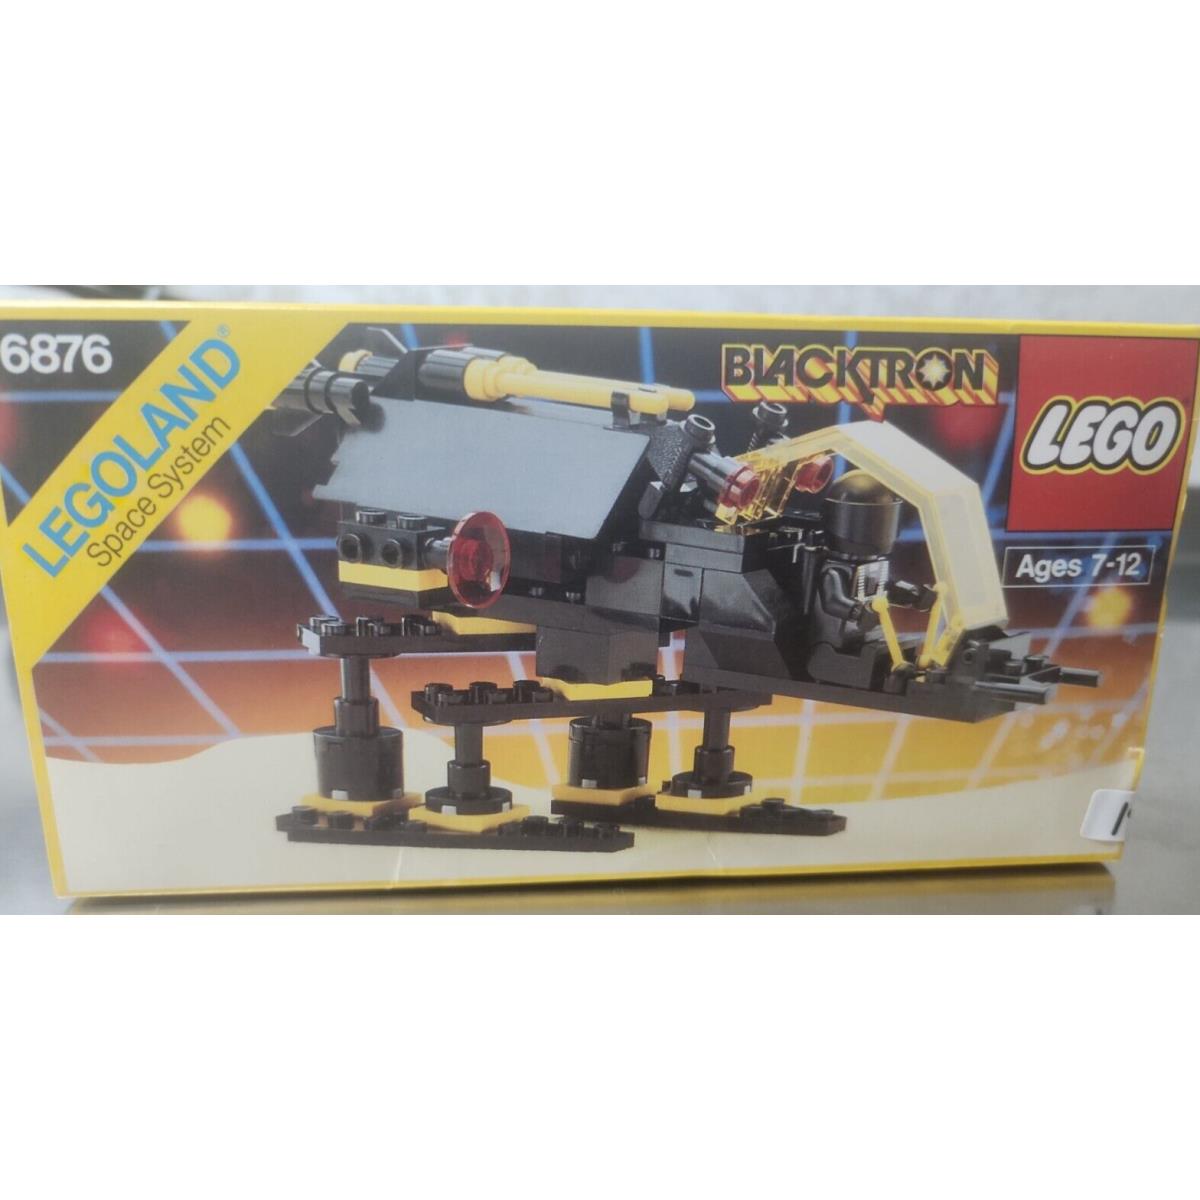 Lego Space Blacktron 6876 Alienator Legoland Space System